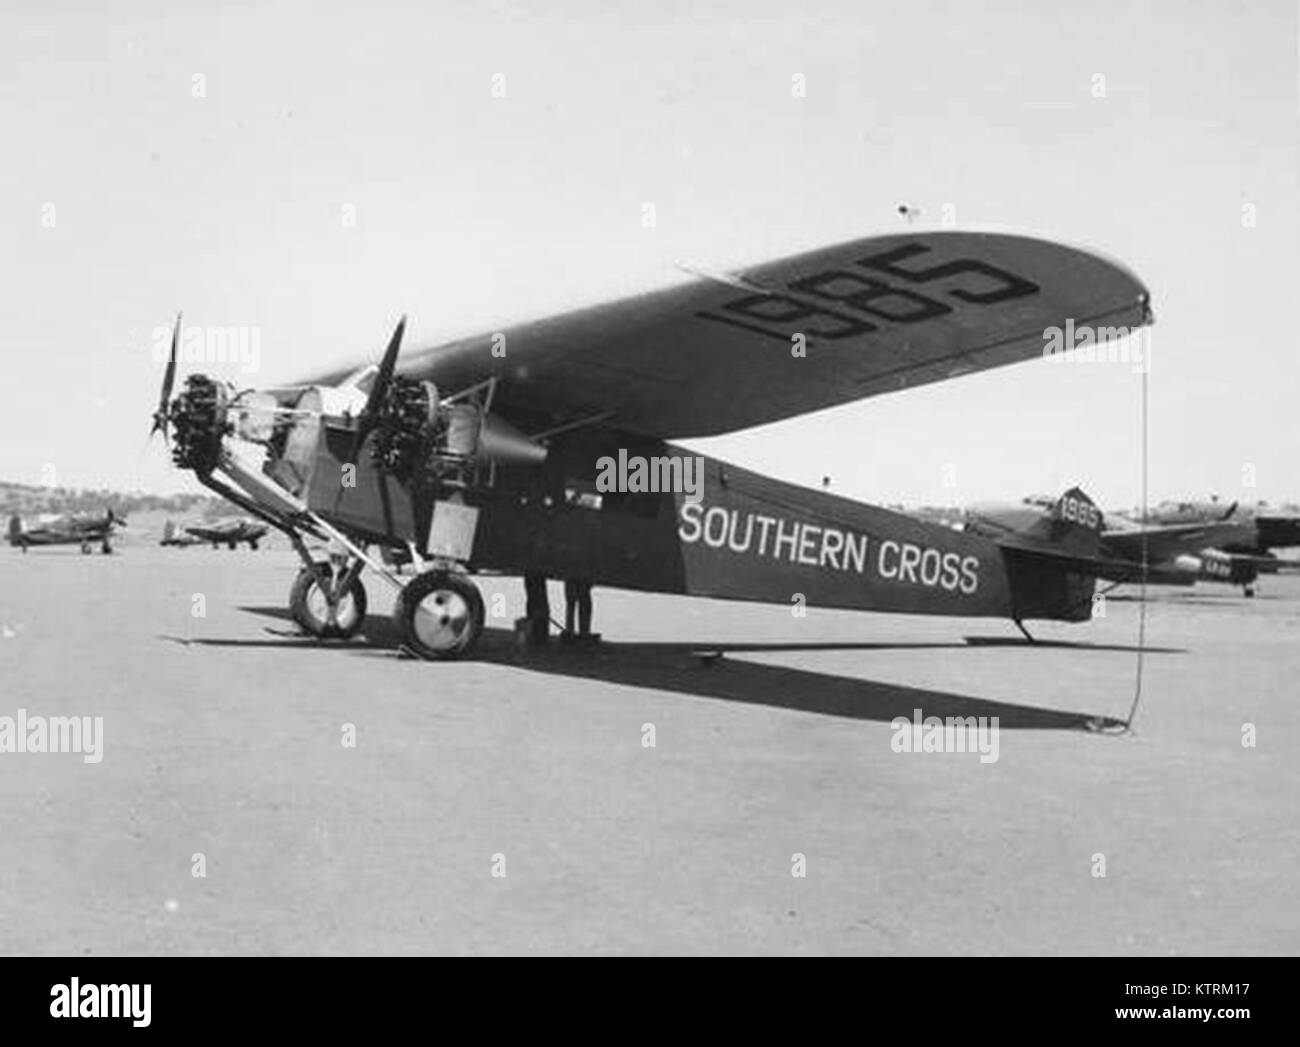 Southern Cross Flugzeug Fokker F.VII/3 m monoplan namens Southern Cross, 1928, Kingsford Smith und Charles Ulm, Fokker F.VII/3 m Monoplan Stockfoto